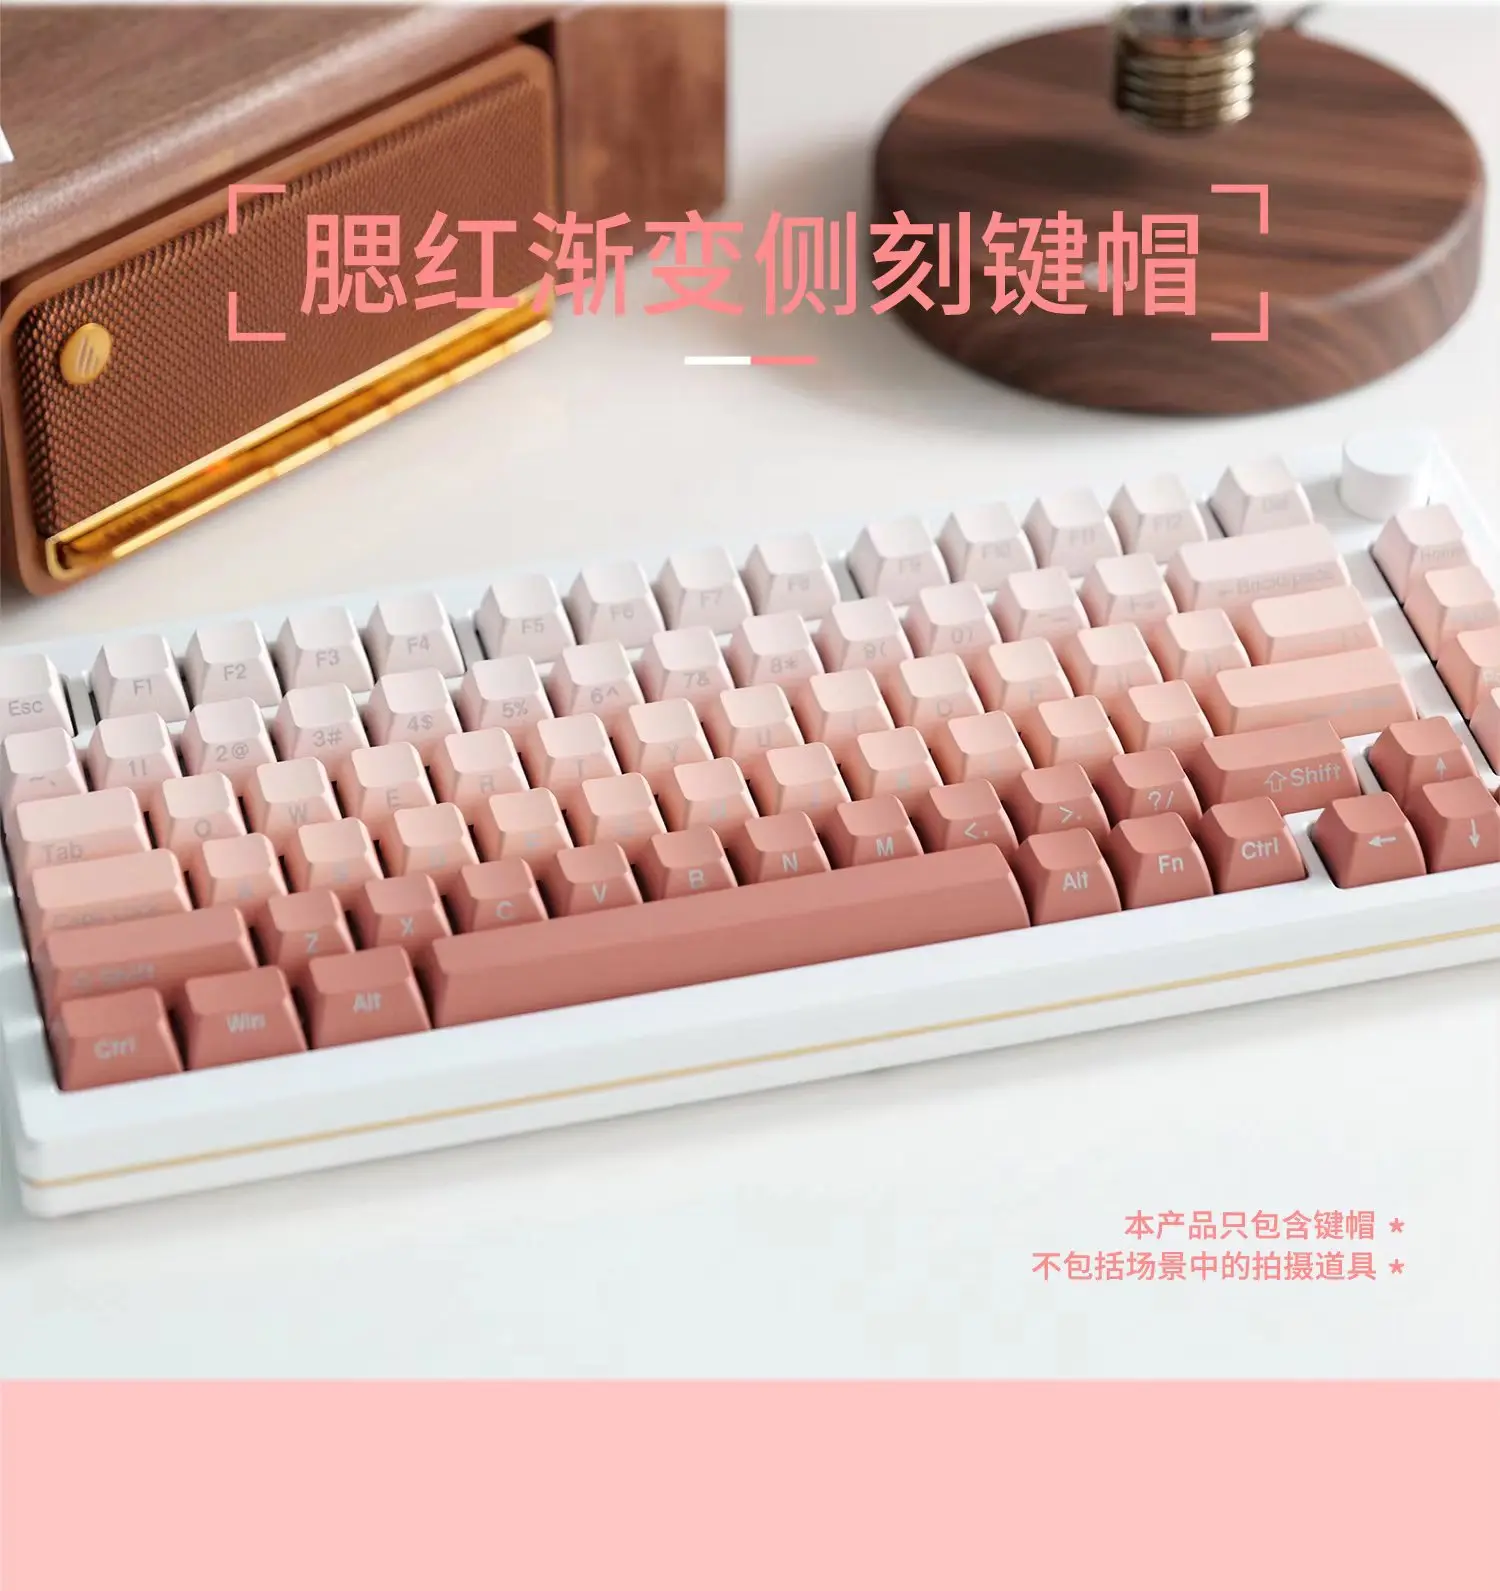 

123 Key Powder Blusher Key Caps Pink Gradient Side Printed PBT Keycaps OEM Profile Keycap For MX Switch Mechanical Keyboard